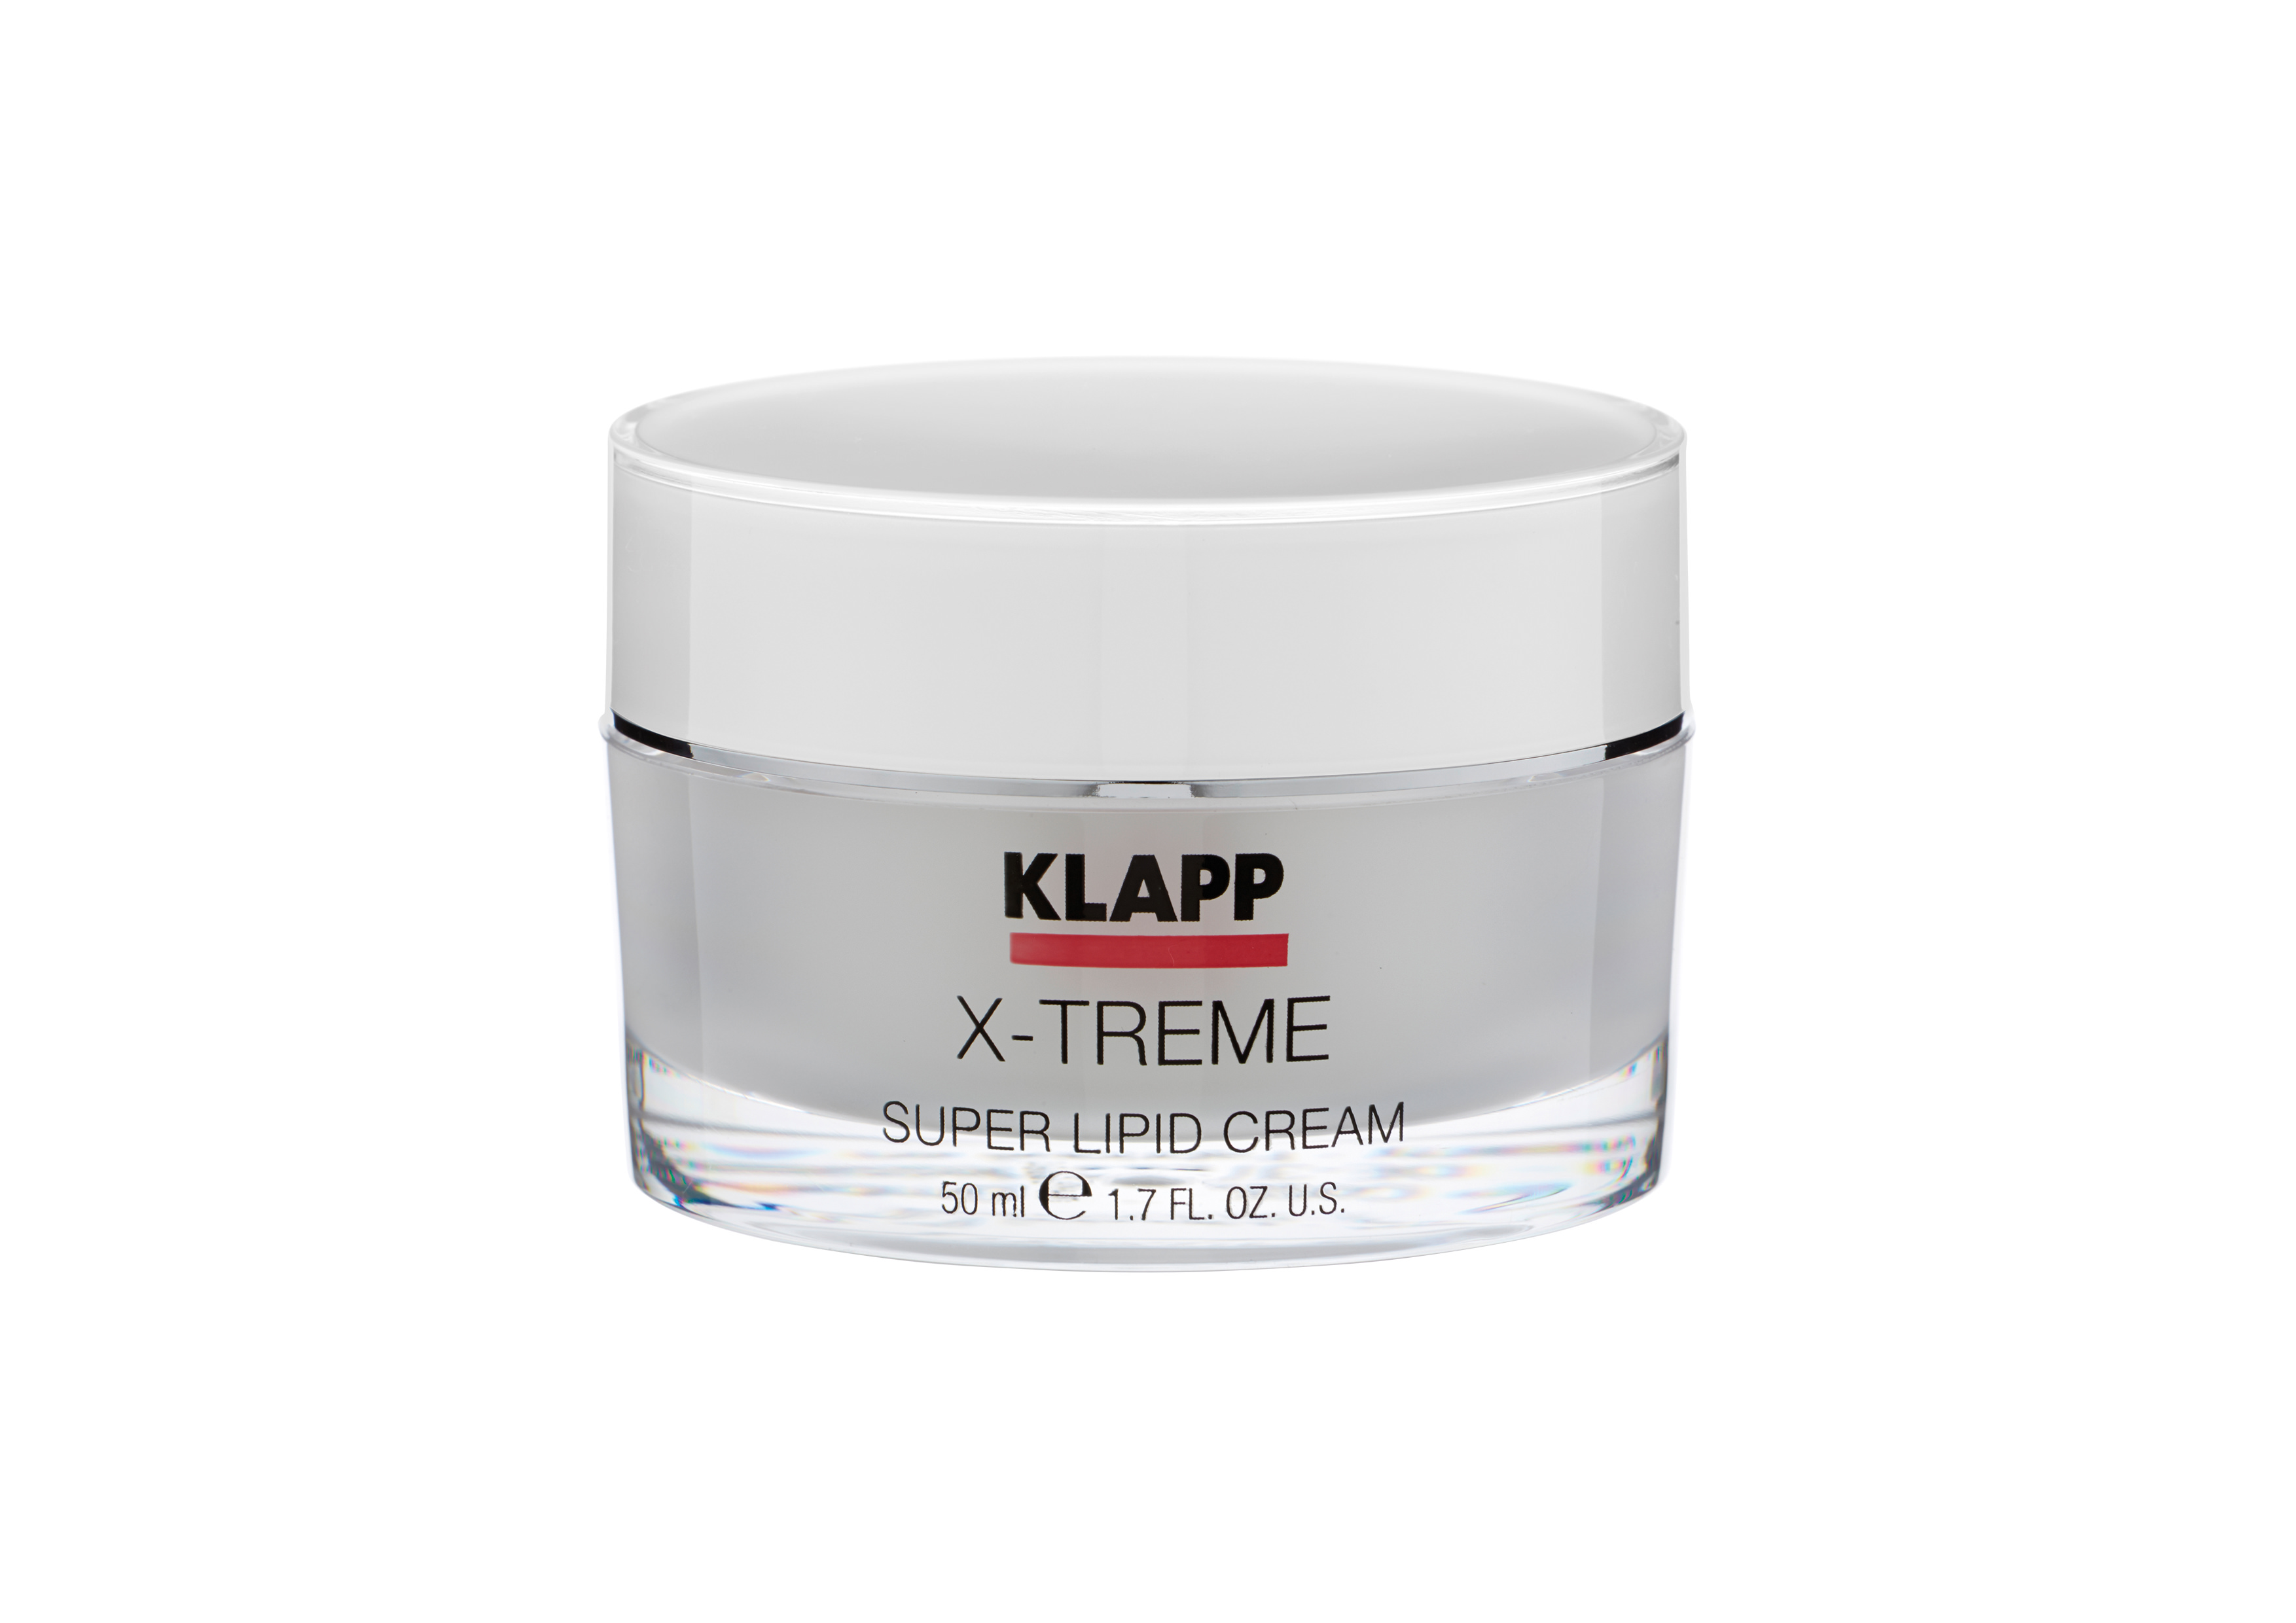 Klapp X-treme Super Lipid Cream